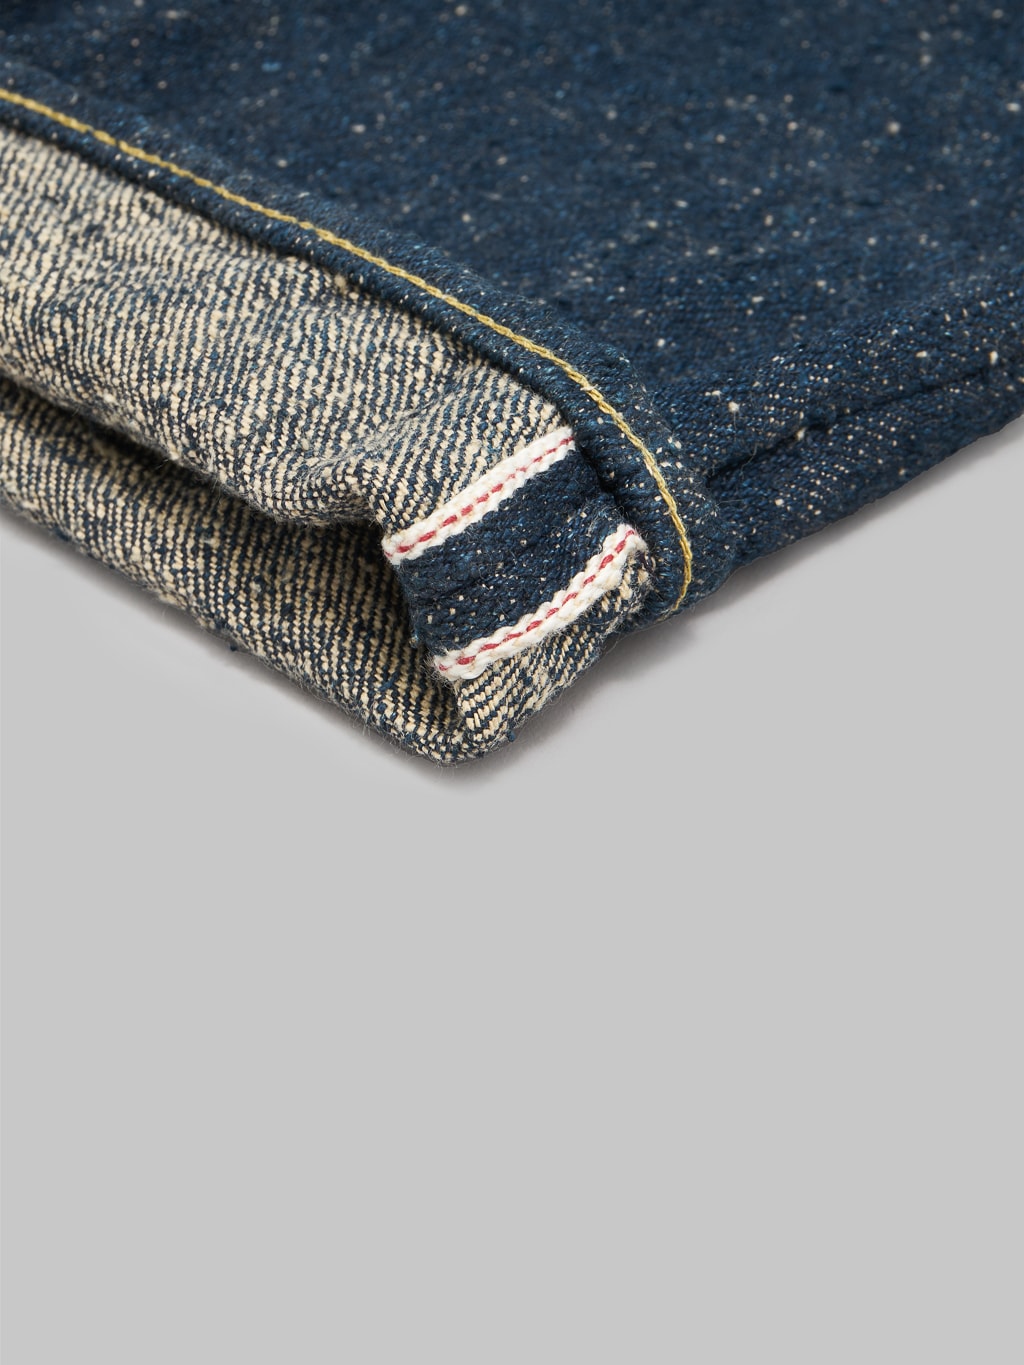 ONI 622 Secret Super Rough 20oz Jeans fabric closeup